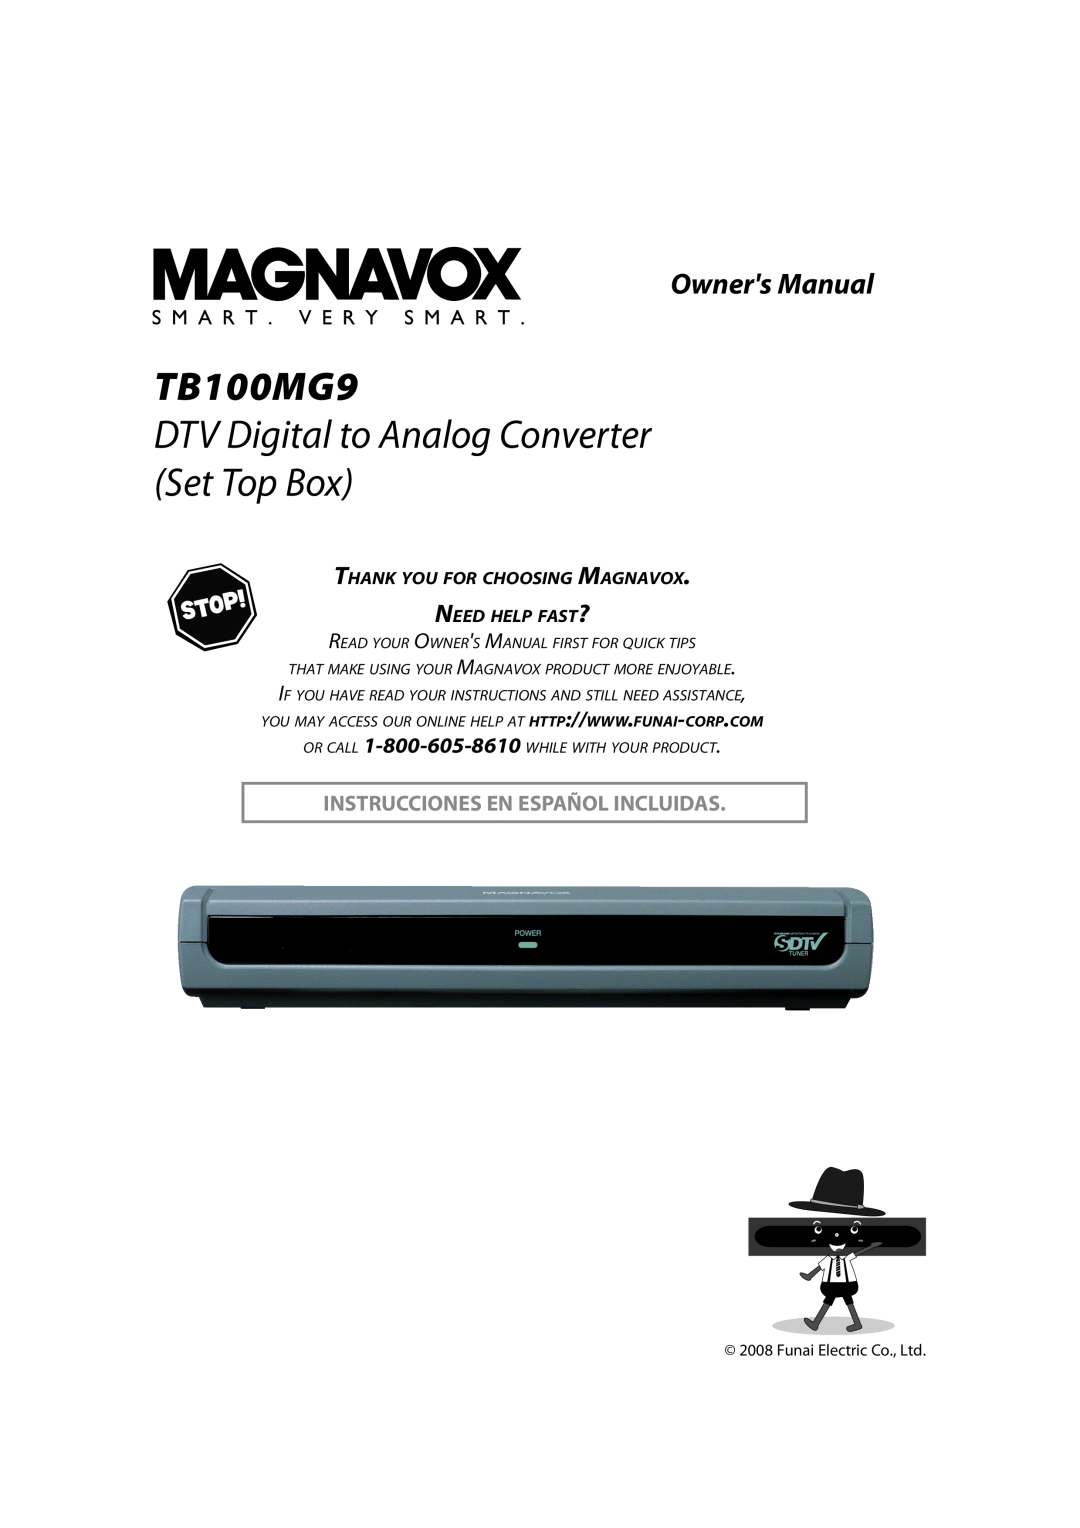 Magnavox TB100MG9 owner manual Instrucciones En Español Incluidas, DTV Digital to Analog Converter Set Top Box 